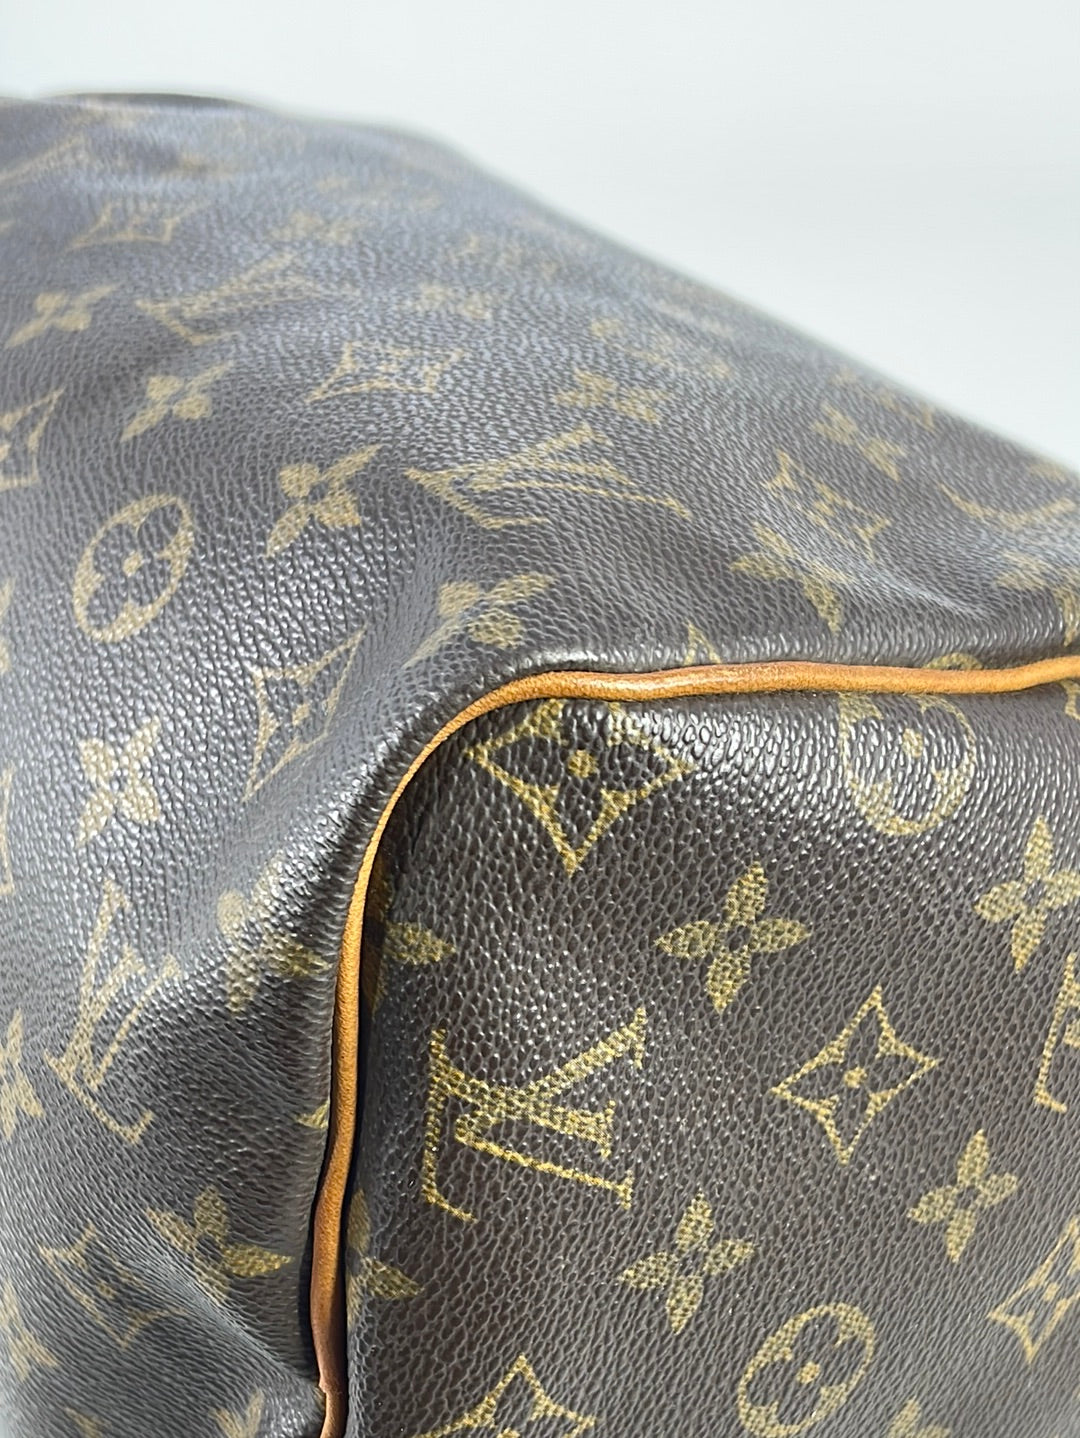 Louis Vuitton Speedy Handbag 397262